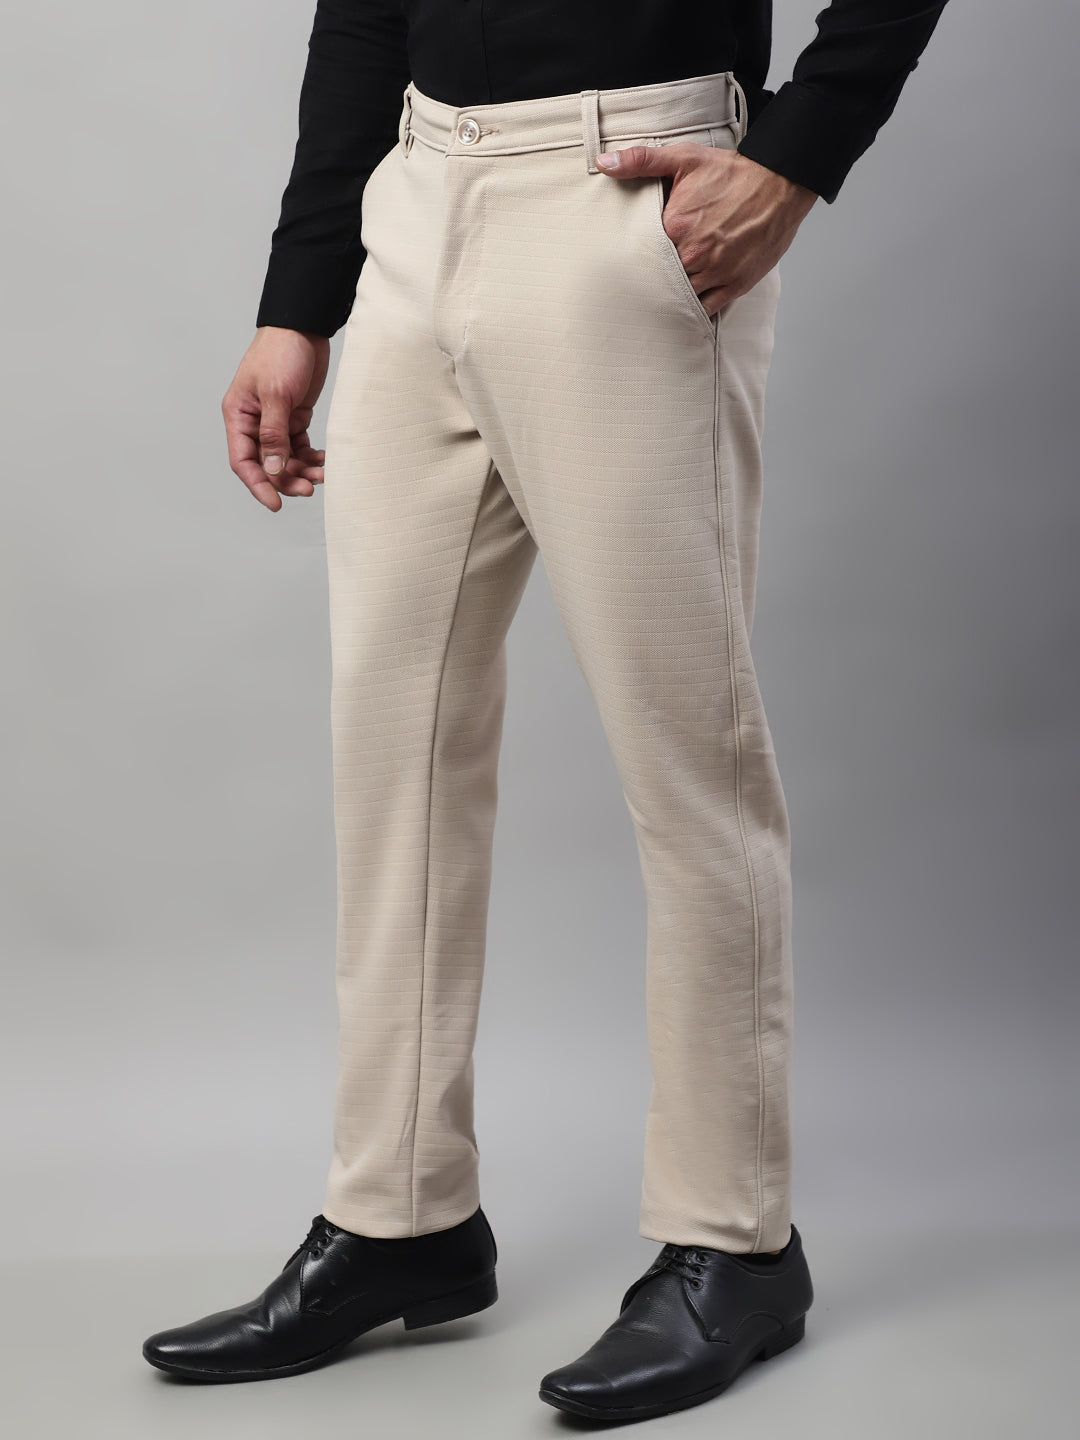 Jainish Men's Cream Tapered Fit Formal Trousers